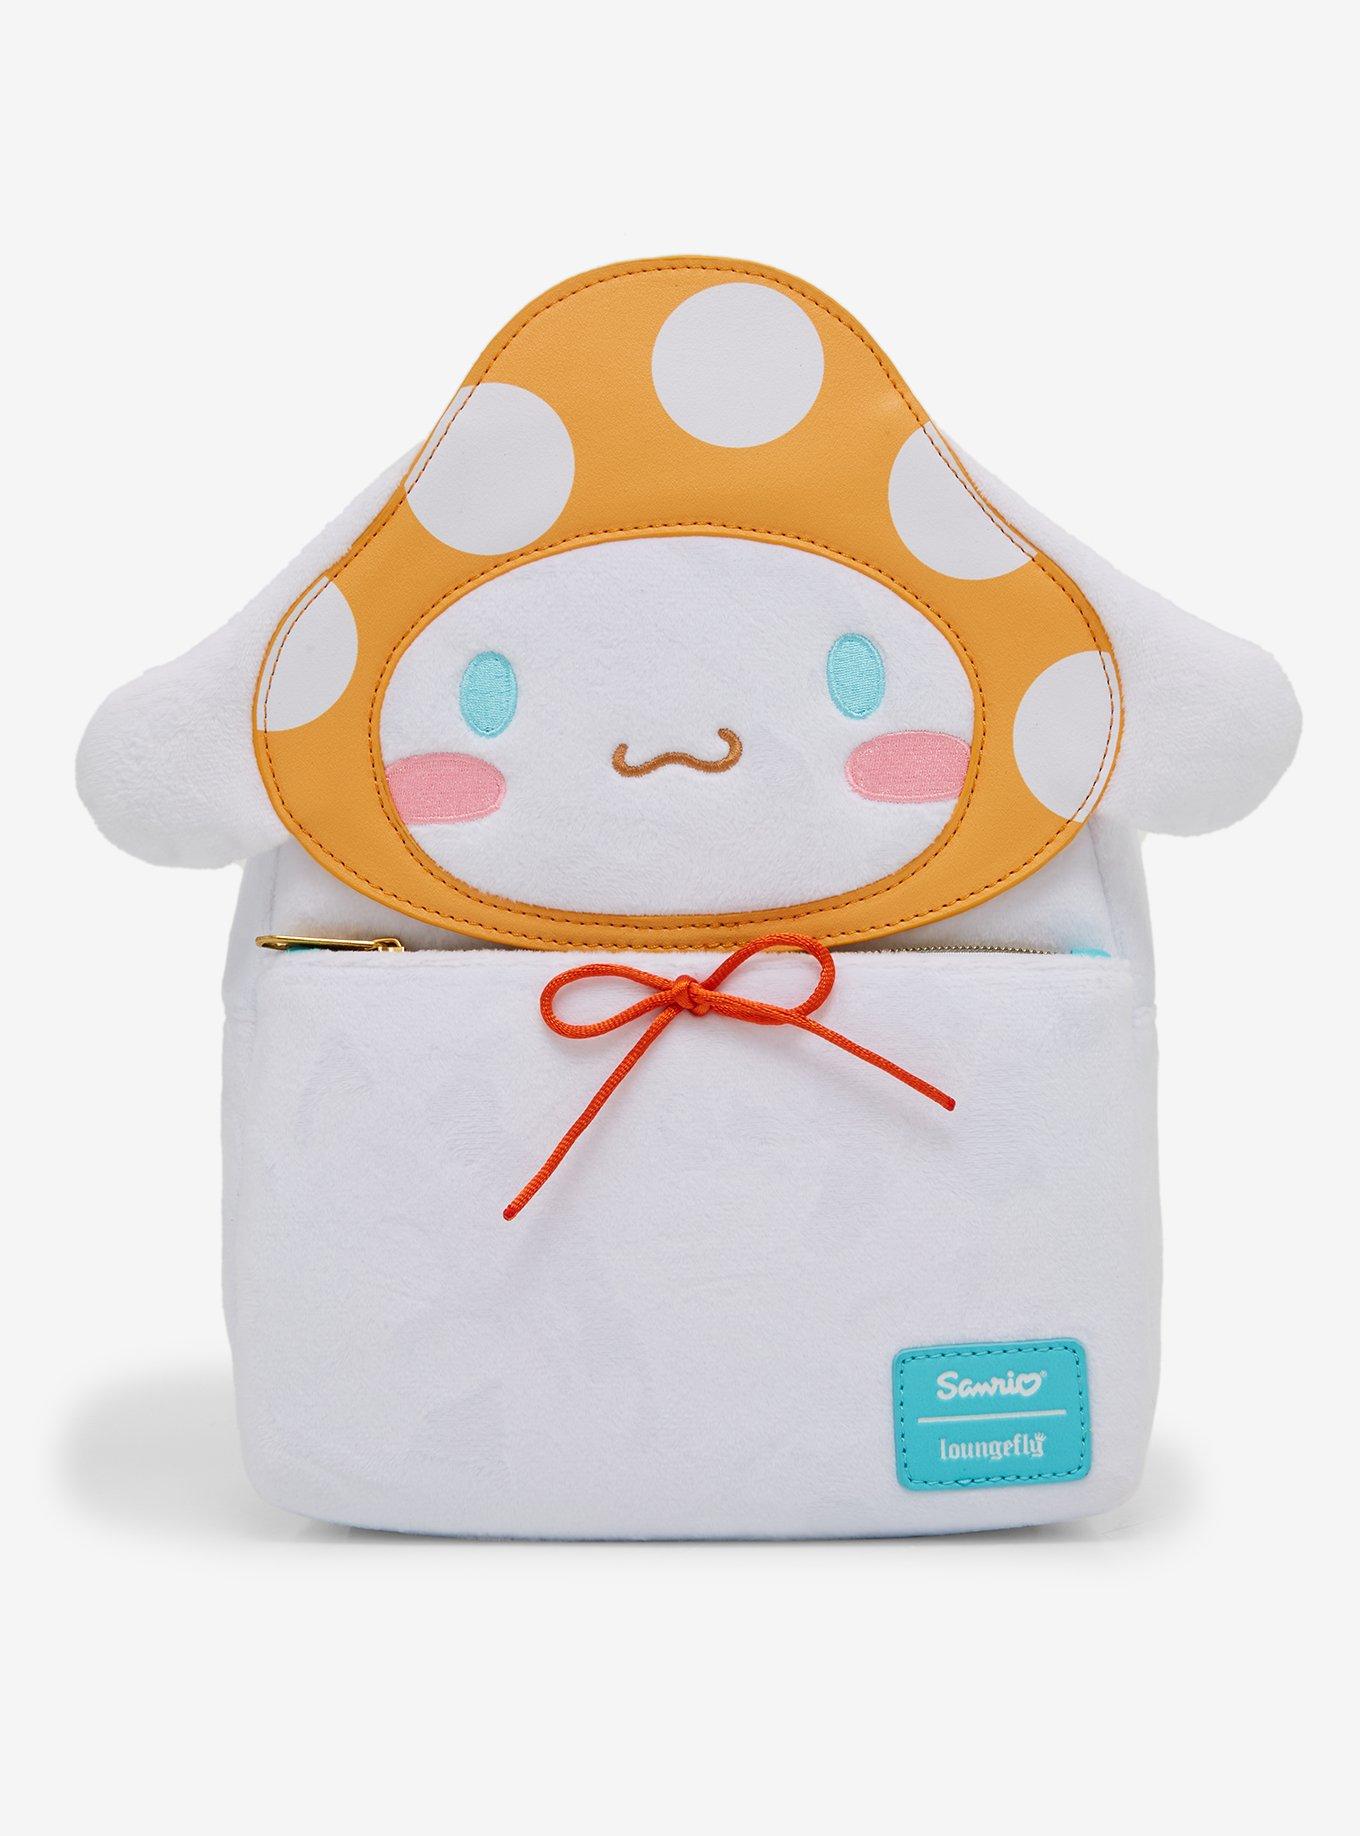 Sanrio Loungefly Bags Review With Very Neko - Super Cute Kawaii!!